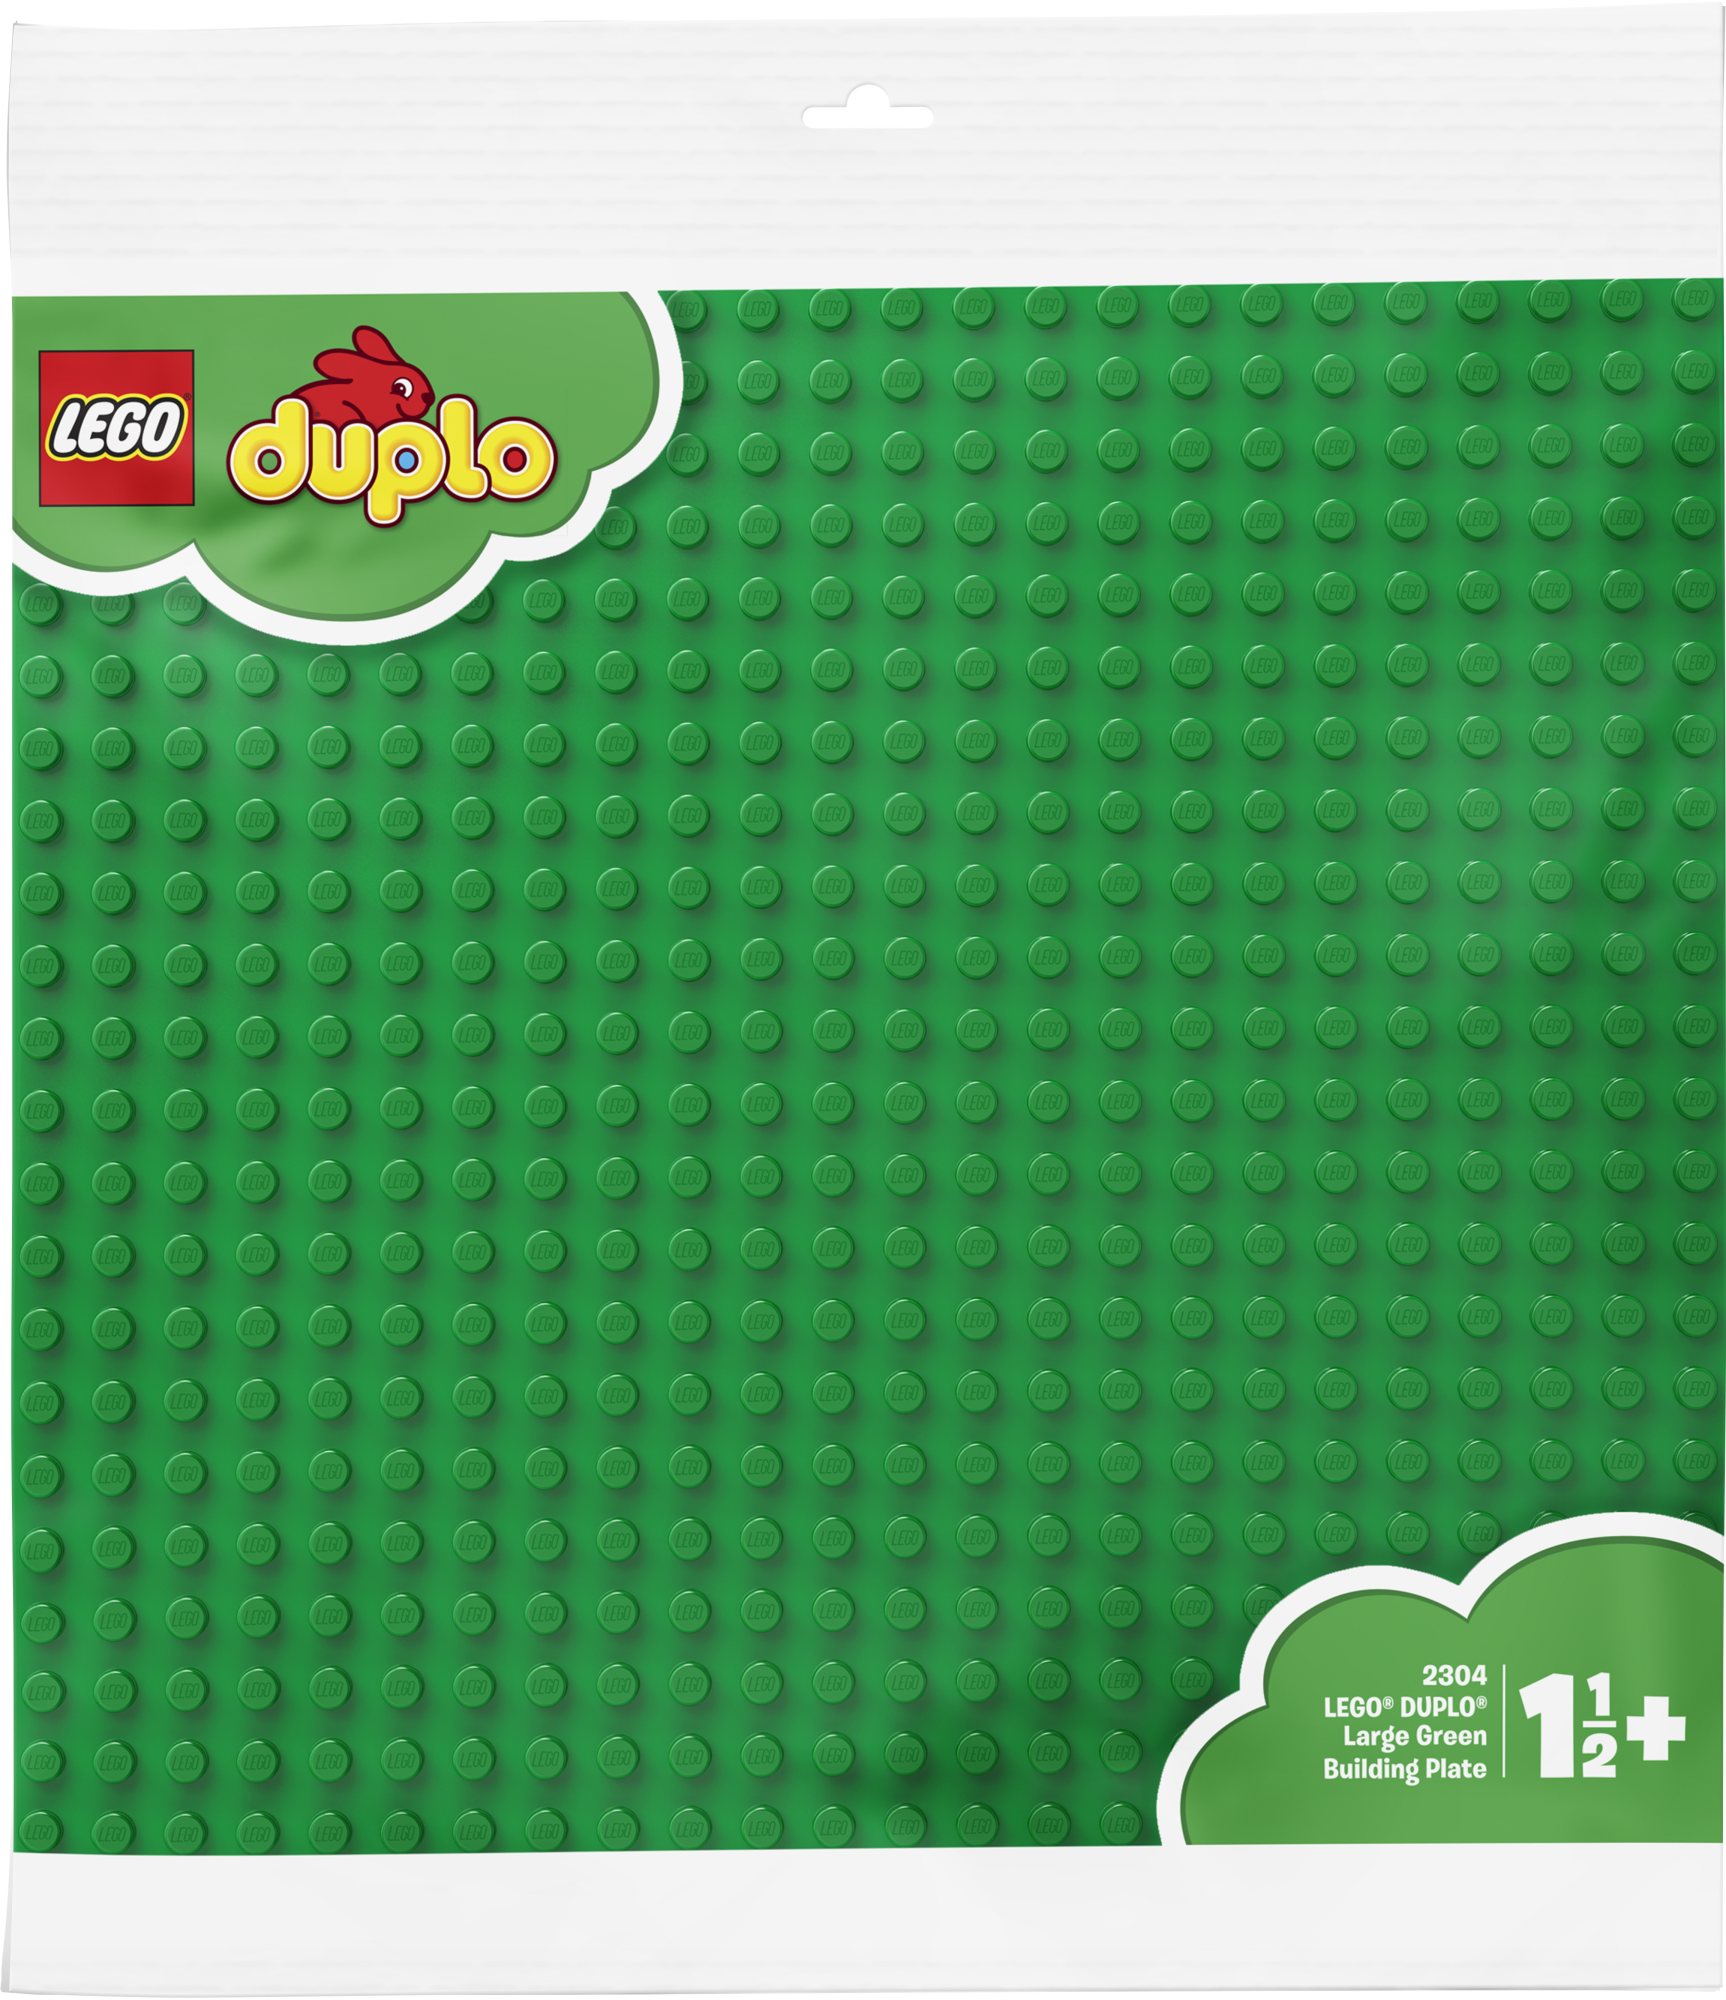 Lego: 2304 - Duplo - Base Verde Lego: Duplo